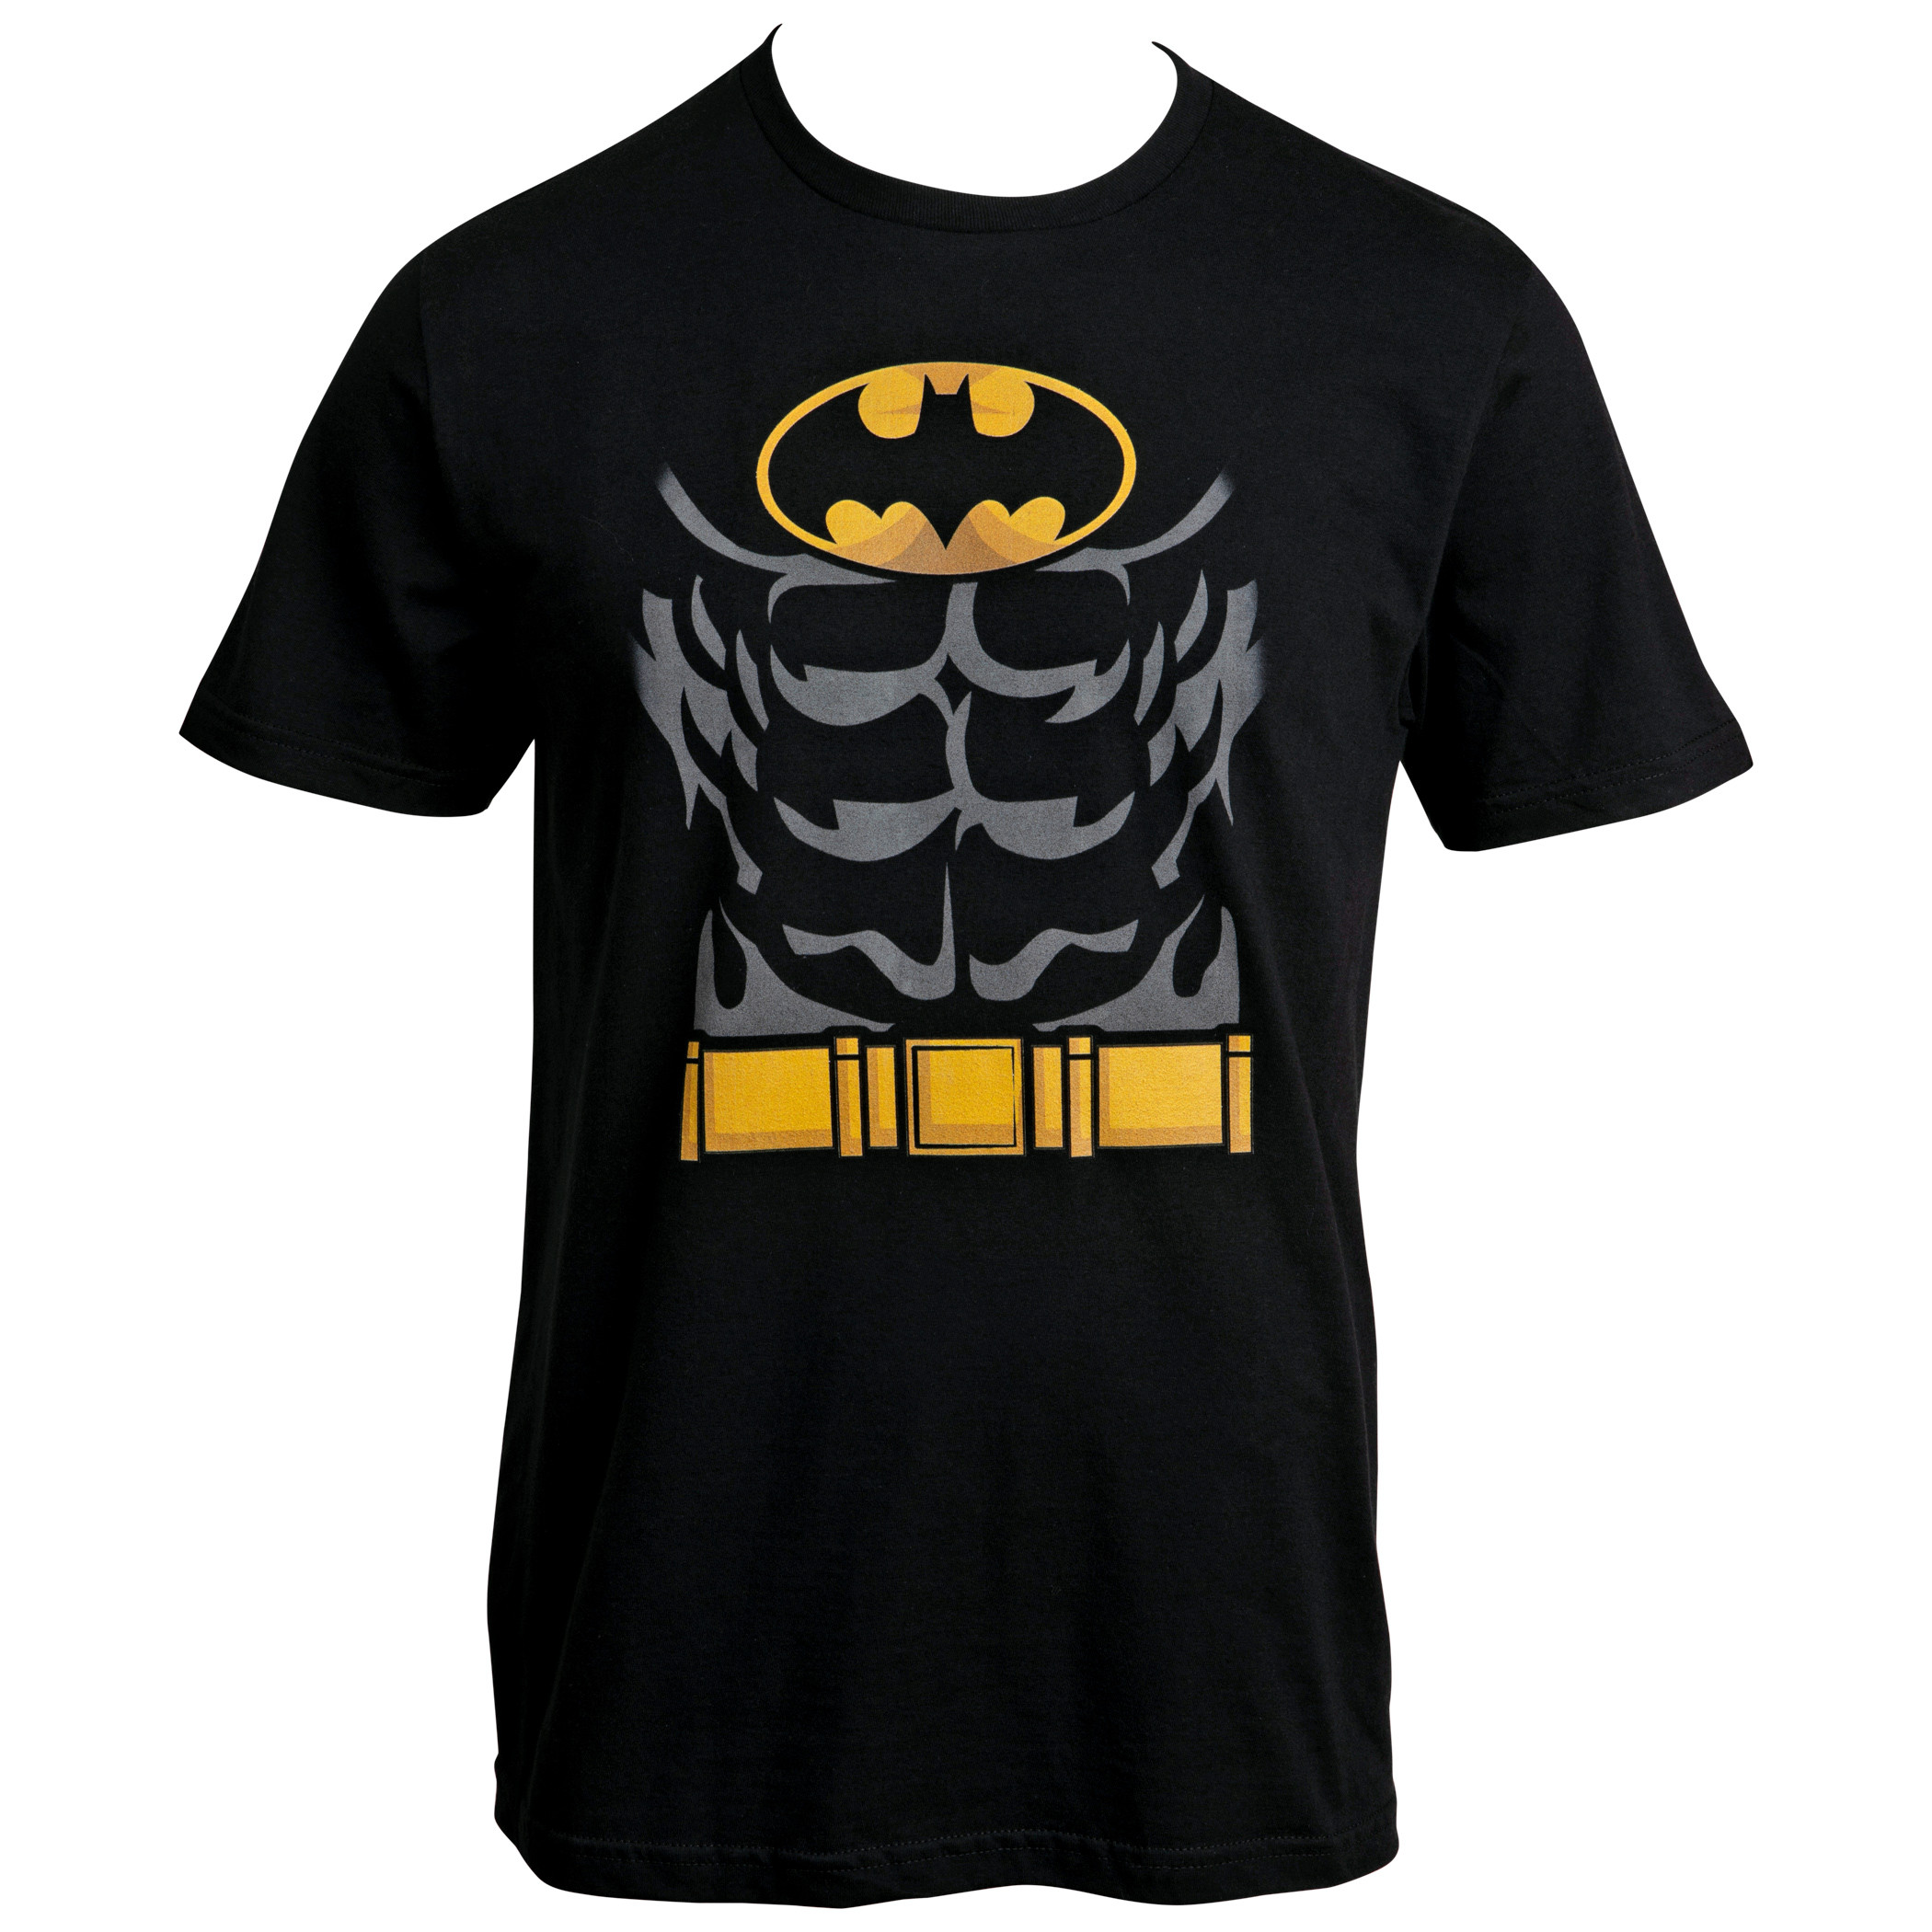 DC Comics Batman Batsuit Costume Design T-Shirt